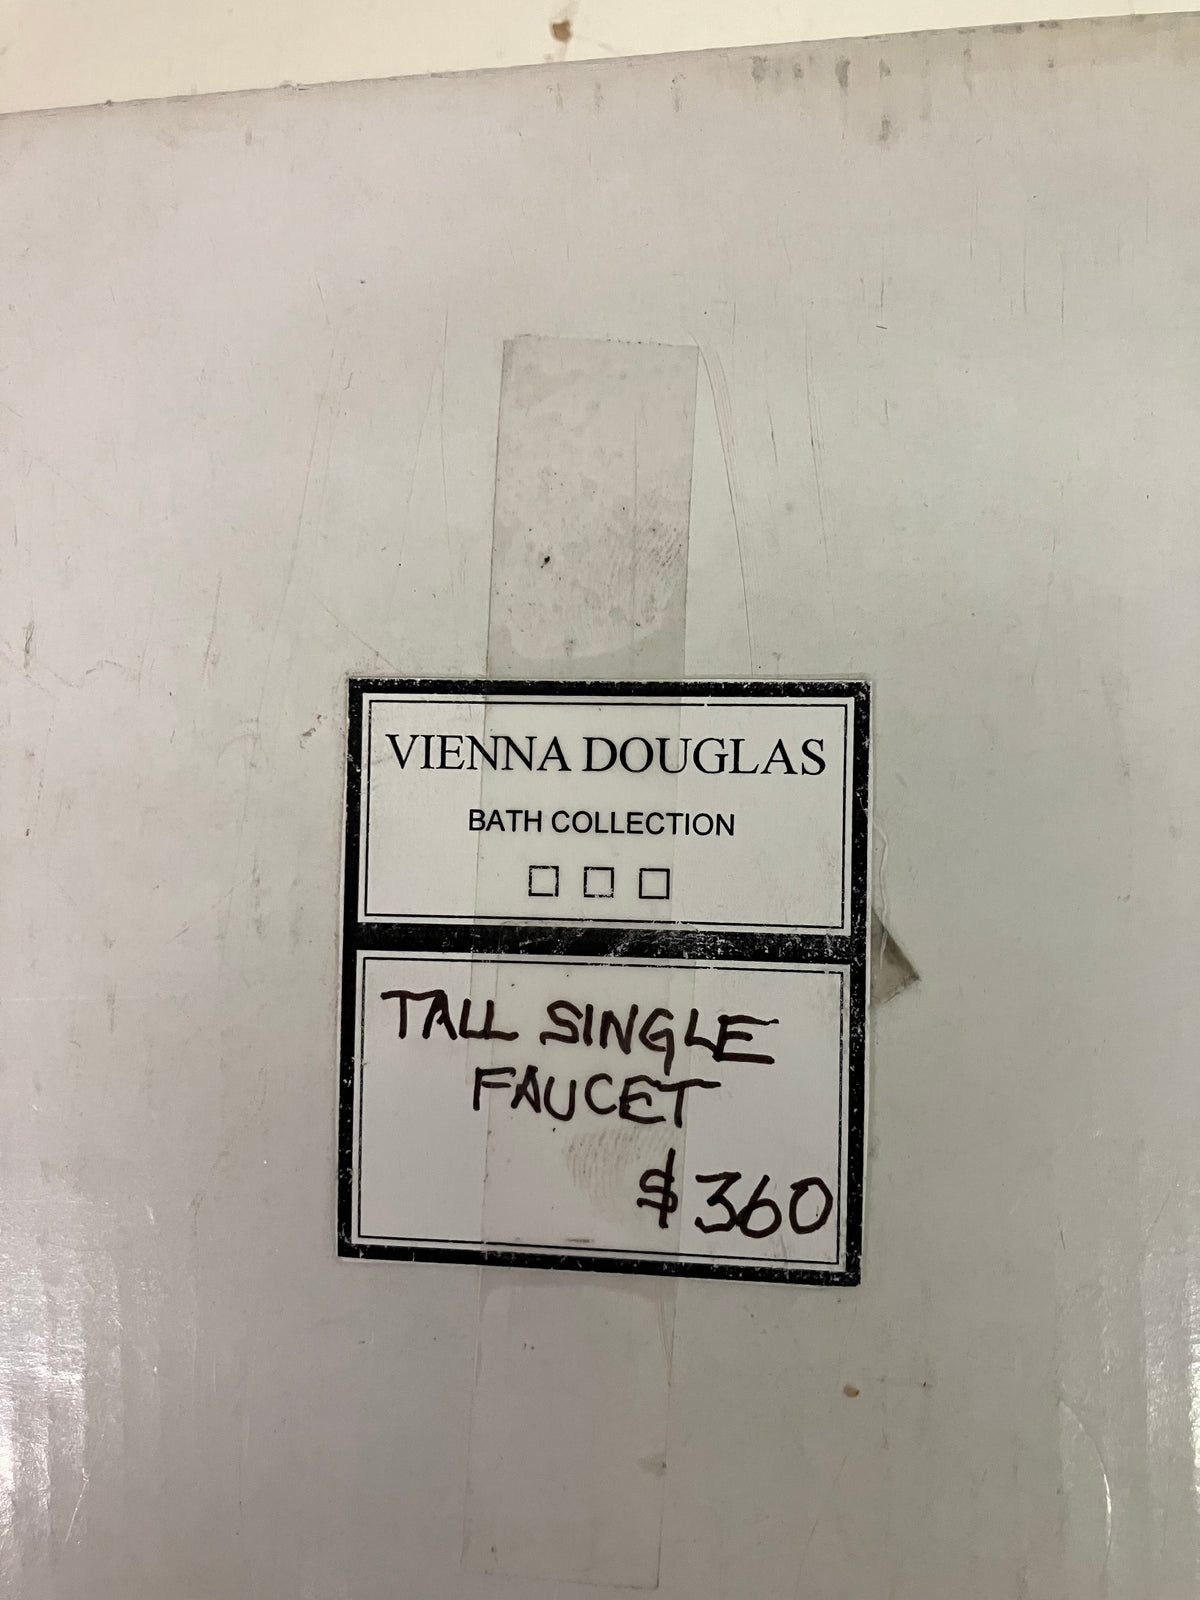 Vienna Douglas Tall Single Faucet